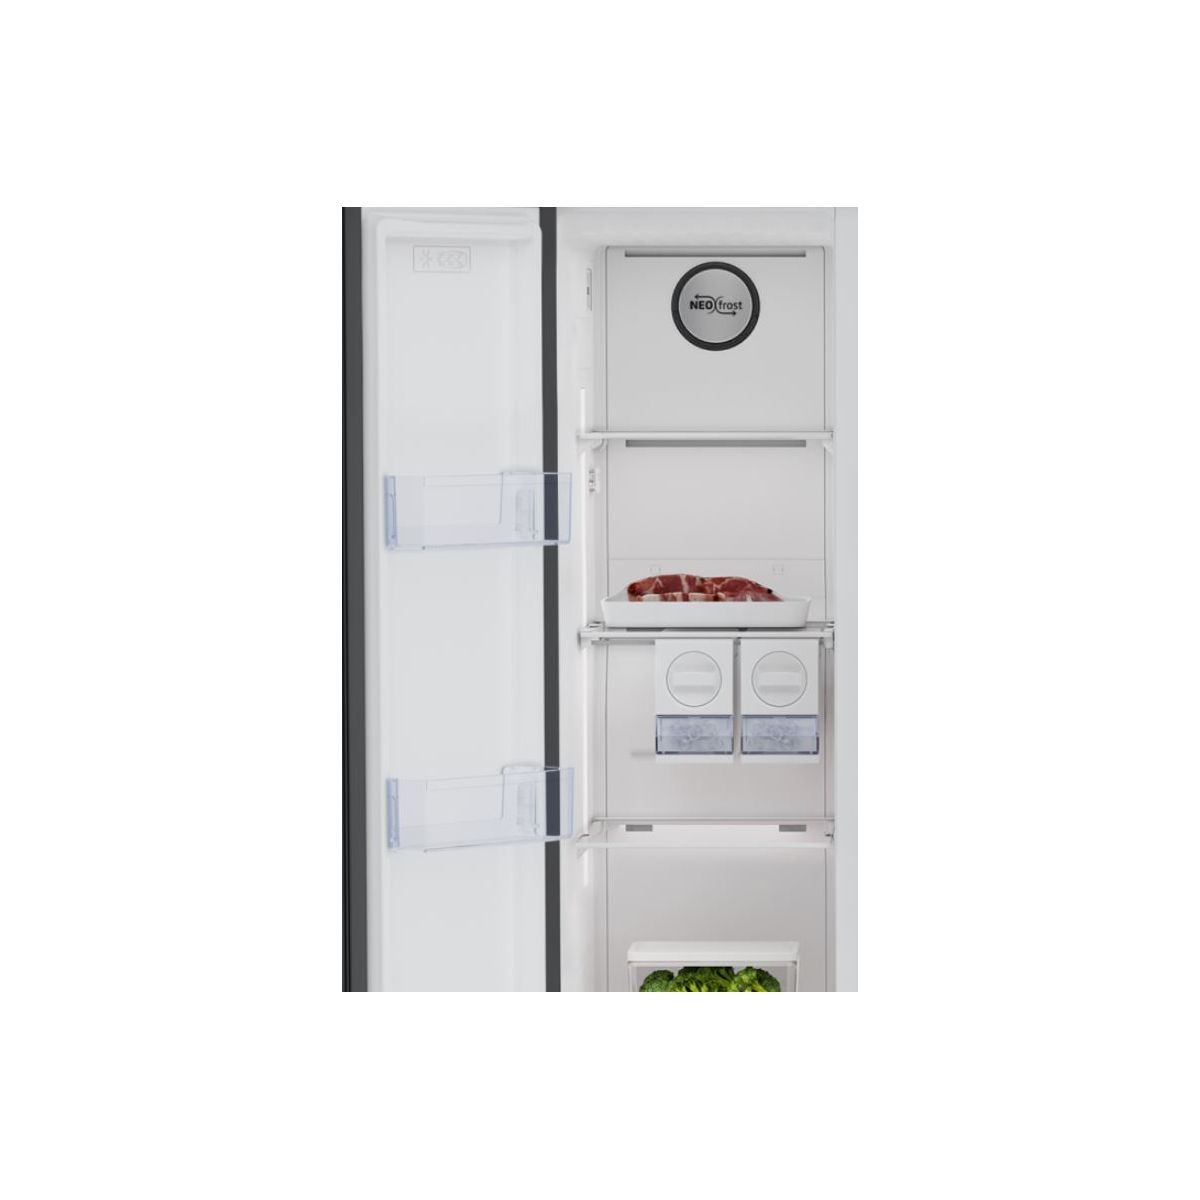 Réfrigérateur américain BEKO GN163241DXBRN - Conforama